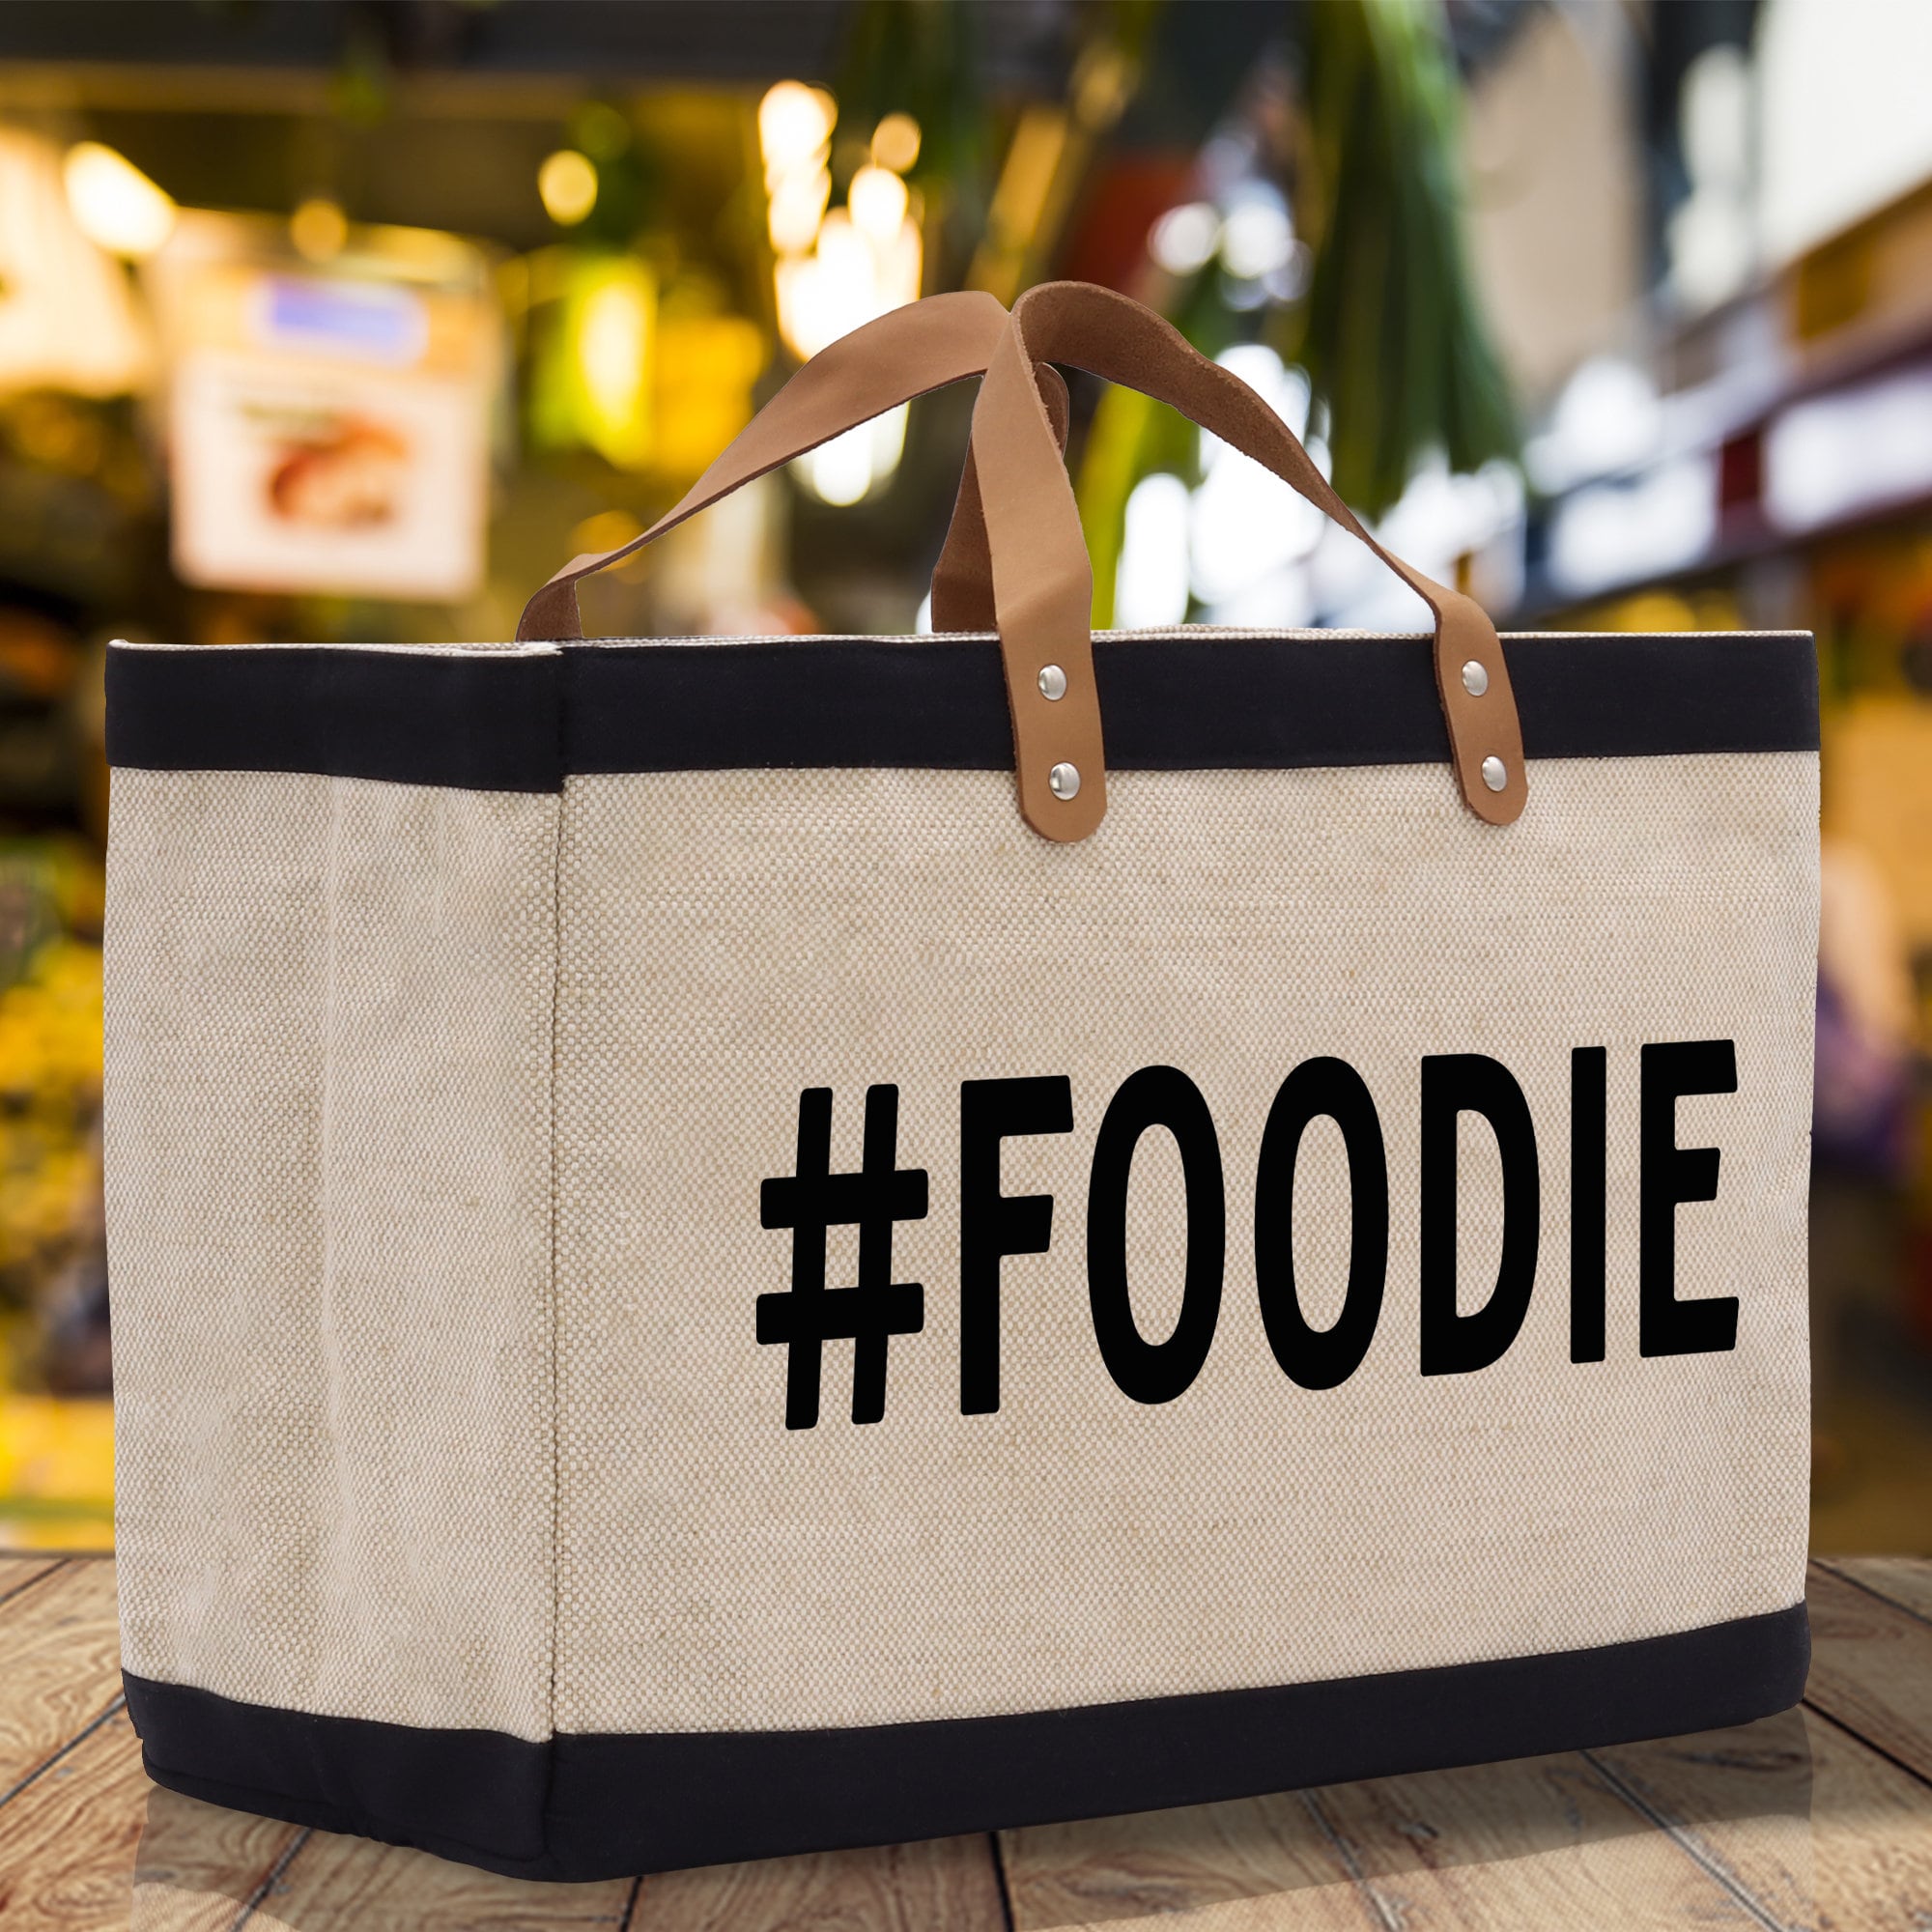 Foodie Jute Canvas Tote Funny Farmer Market Bag Quote Jute Bag Shopping Bag Burlap Bag Farmhouse Bag Grocery Bag